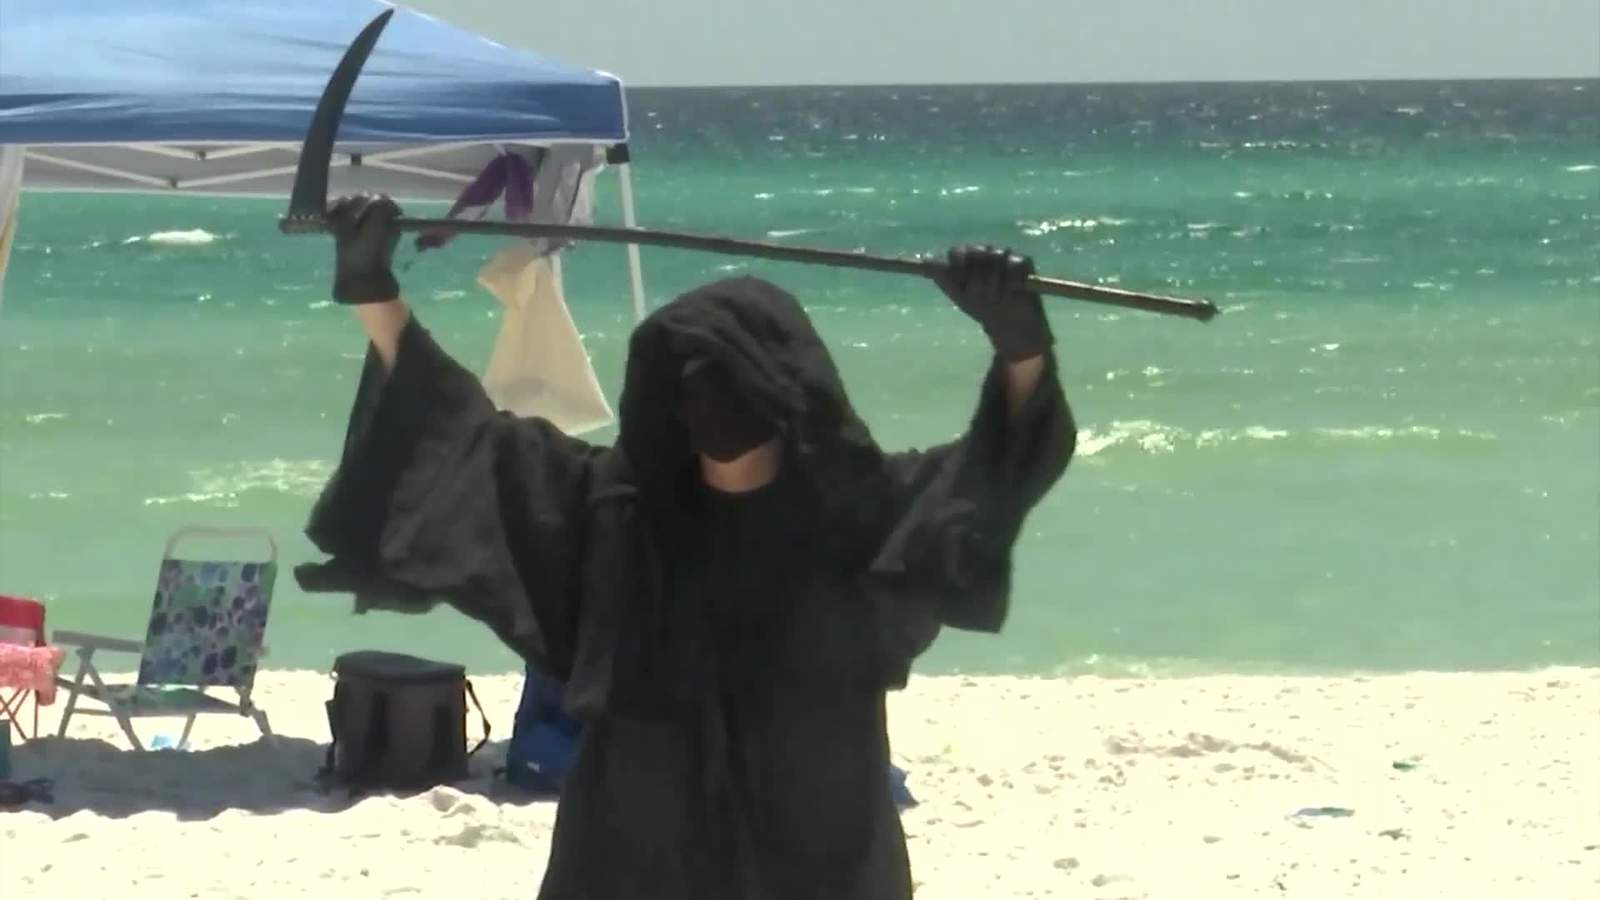 Appeals court refers ‘Grim Reaper’ beach case to Florida Bar